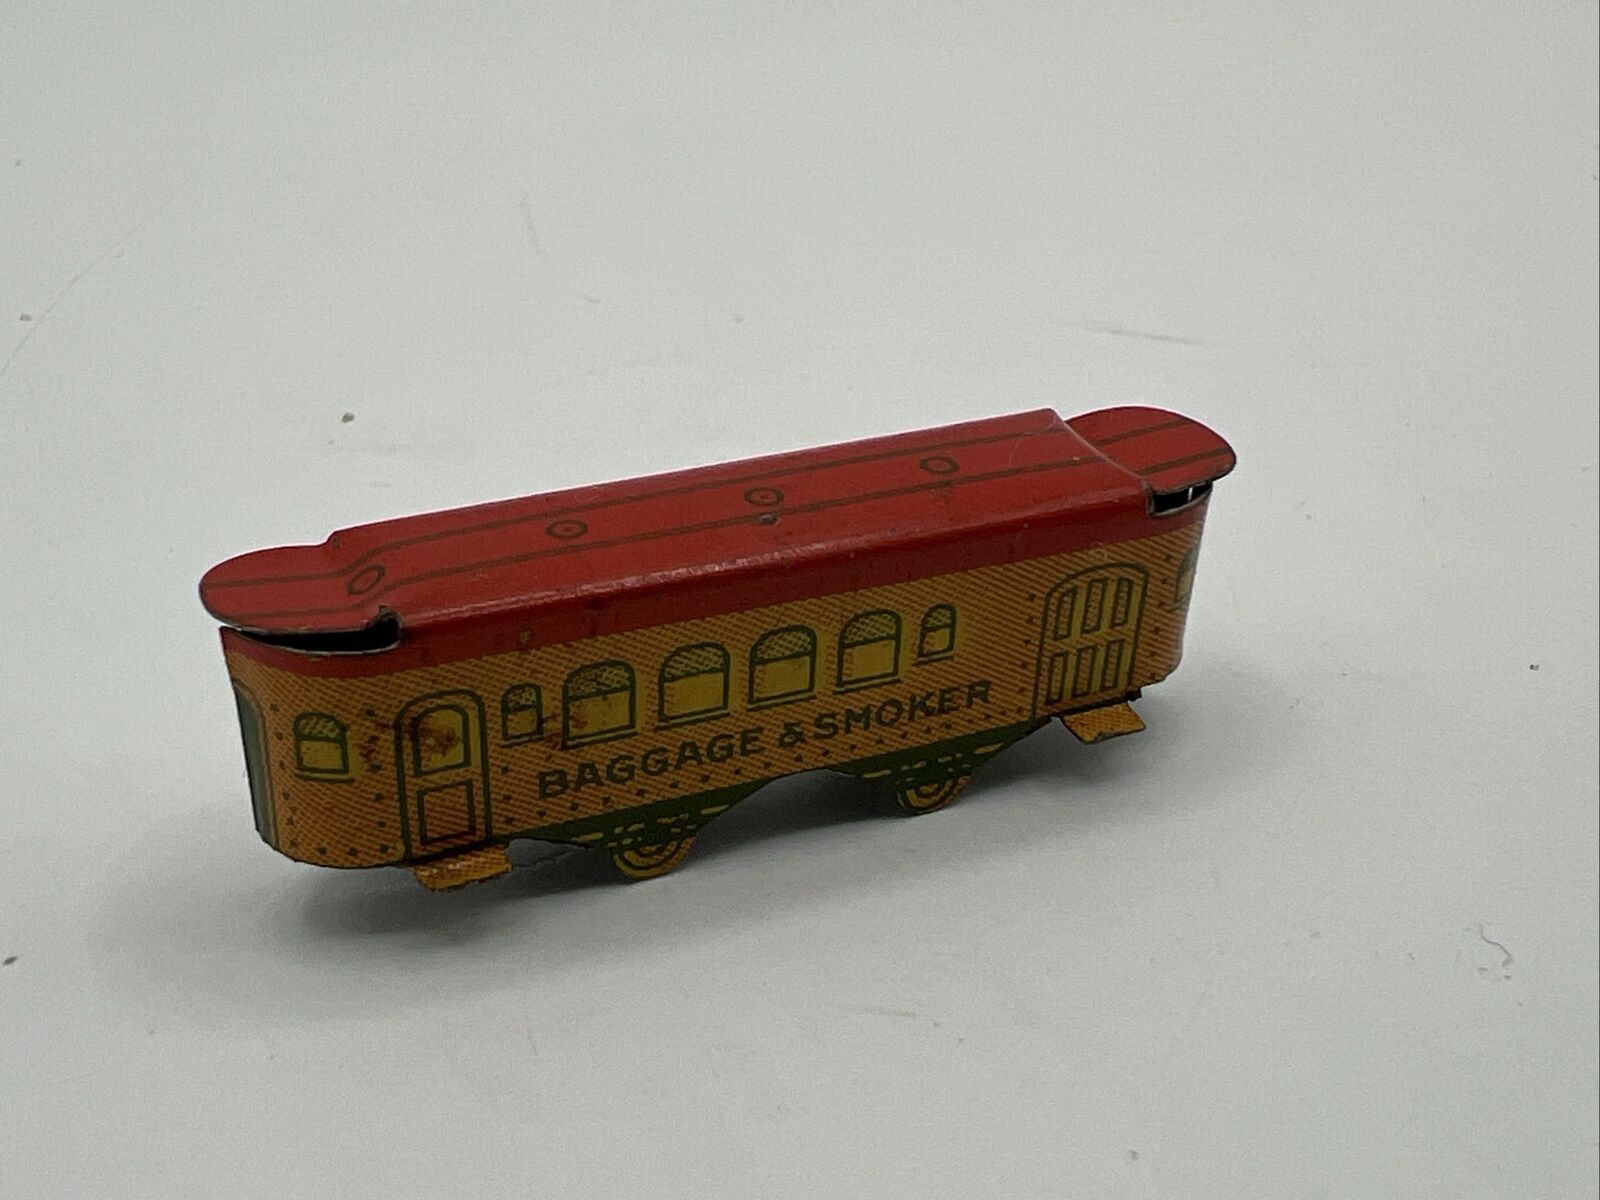 Rare Cracker Jack prize tin litho toy train car Baggage & Smoker